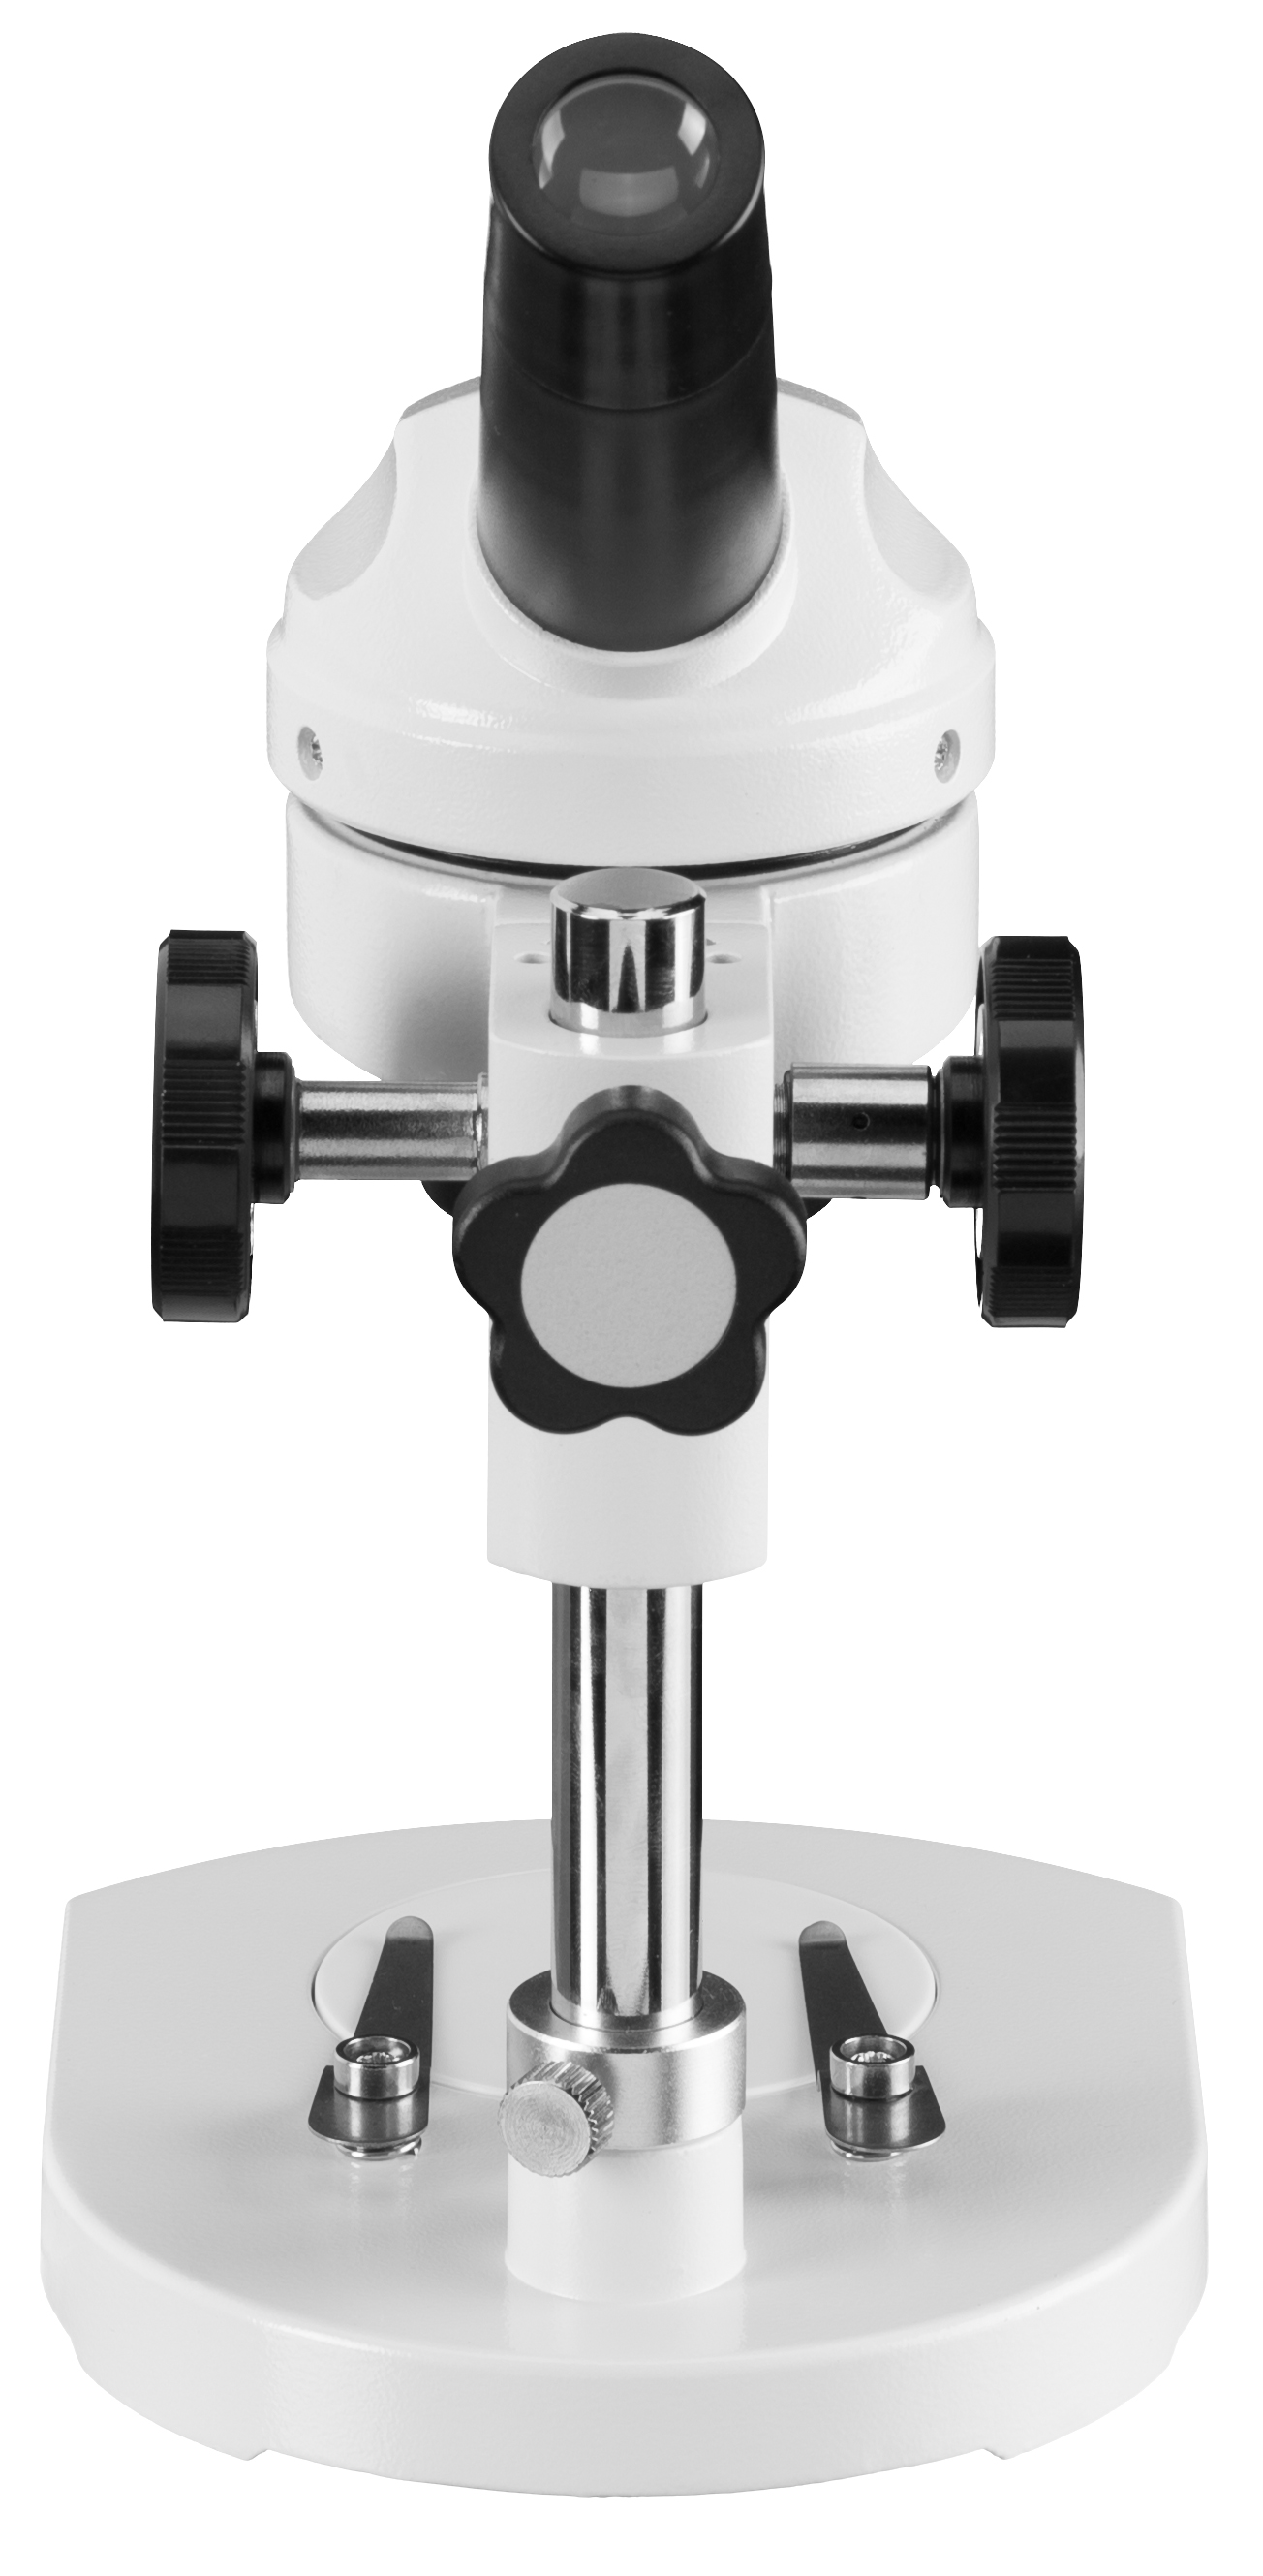 BRESSER JUNIOR Reflected Light Microscope 20x magnification